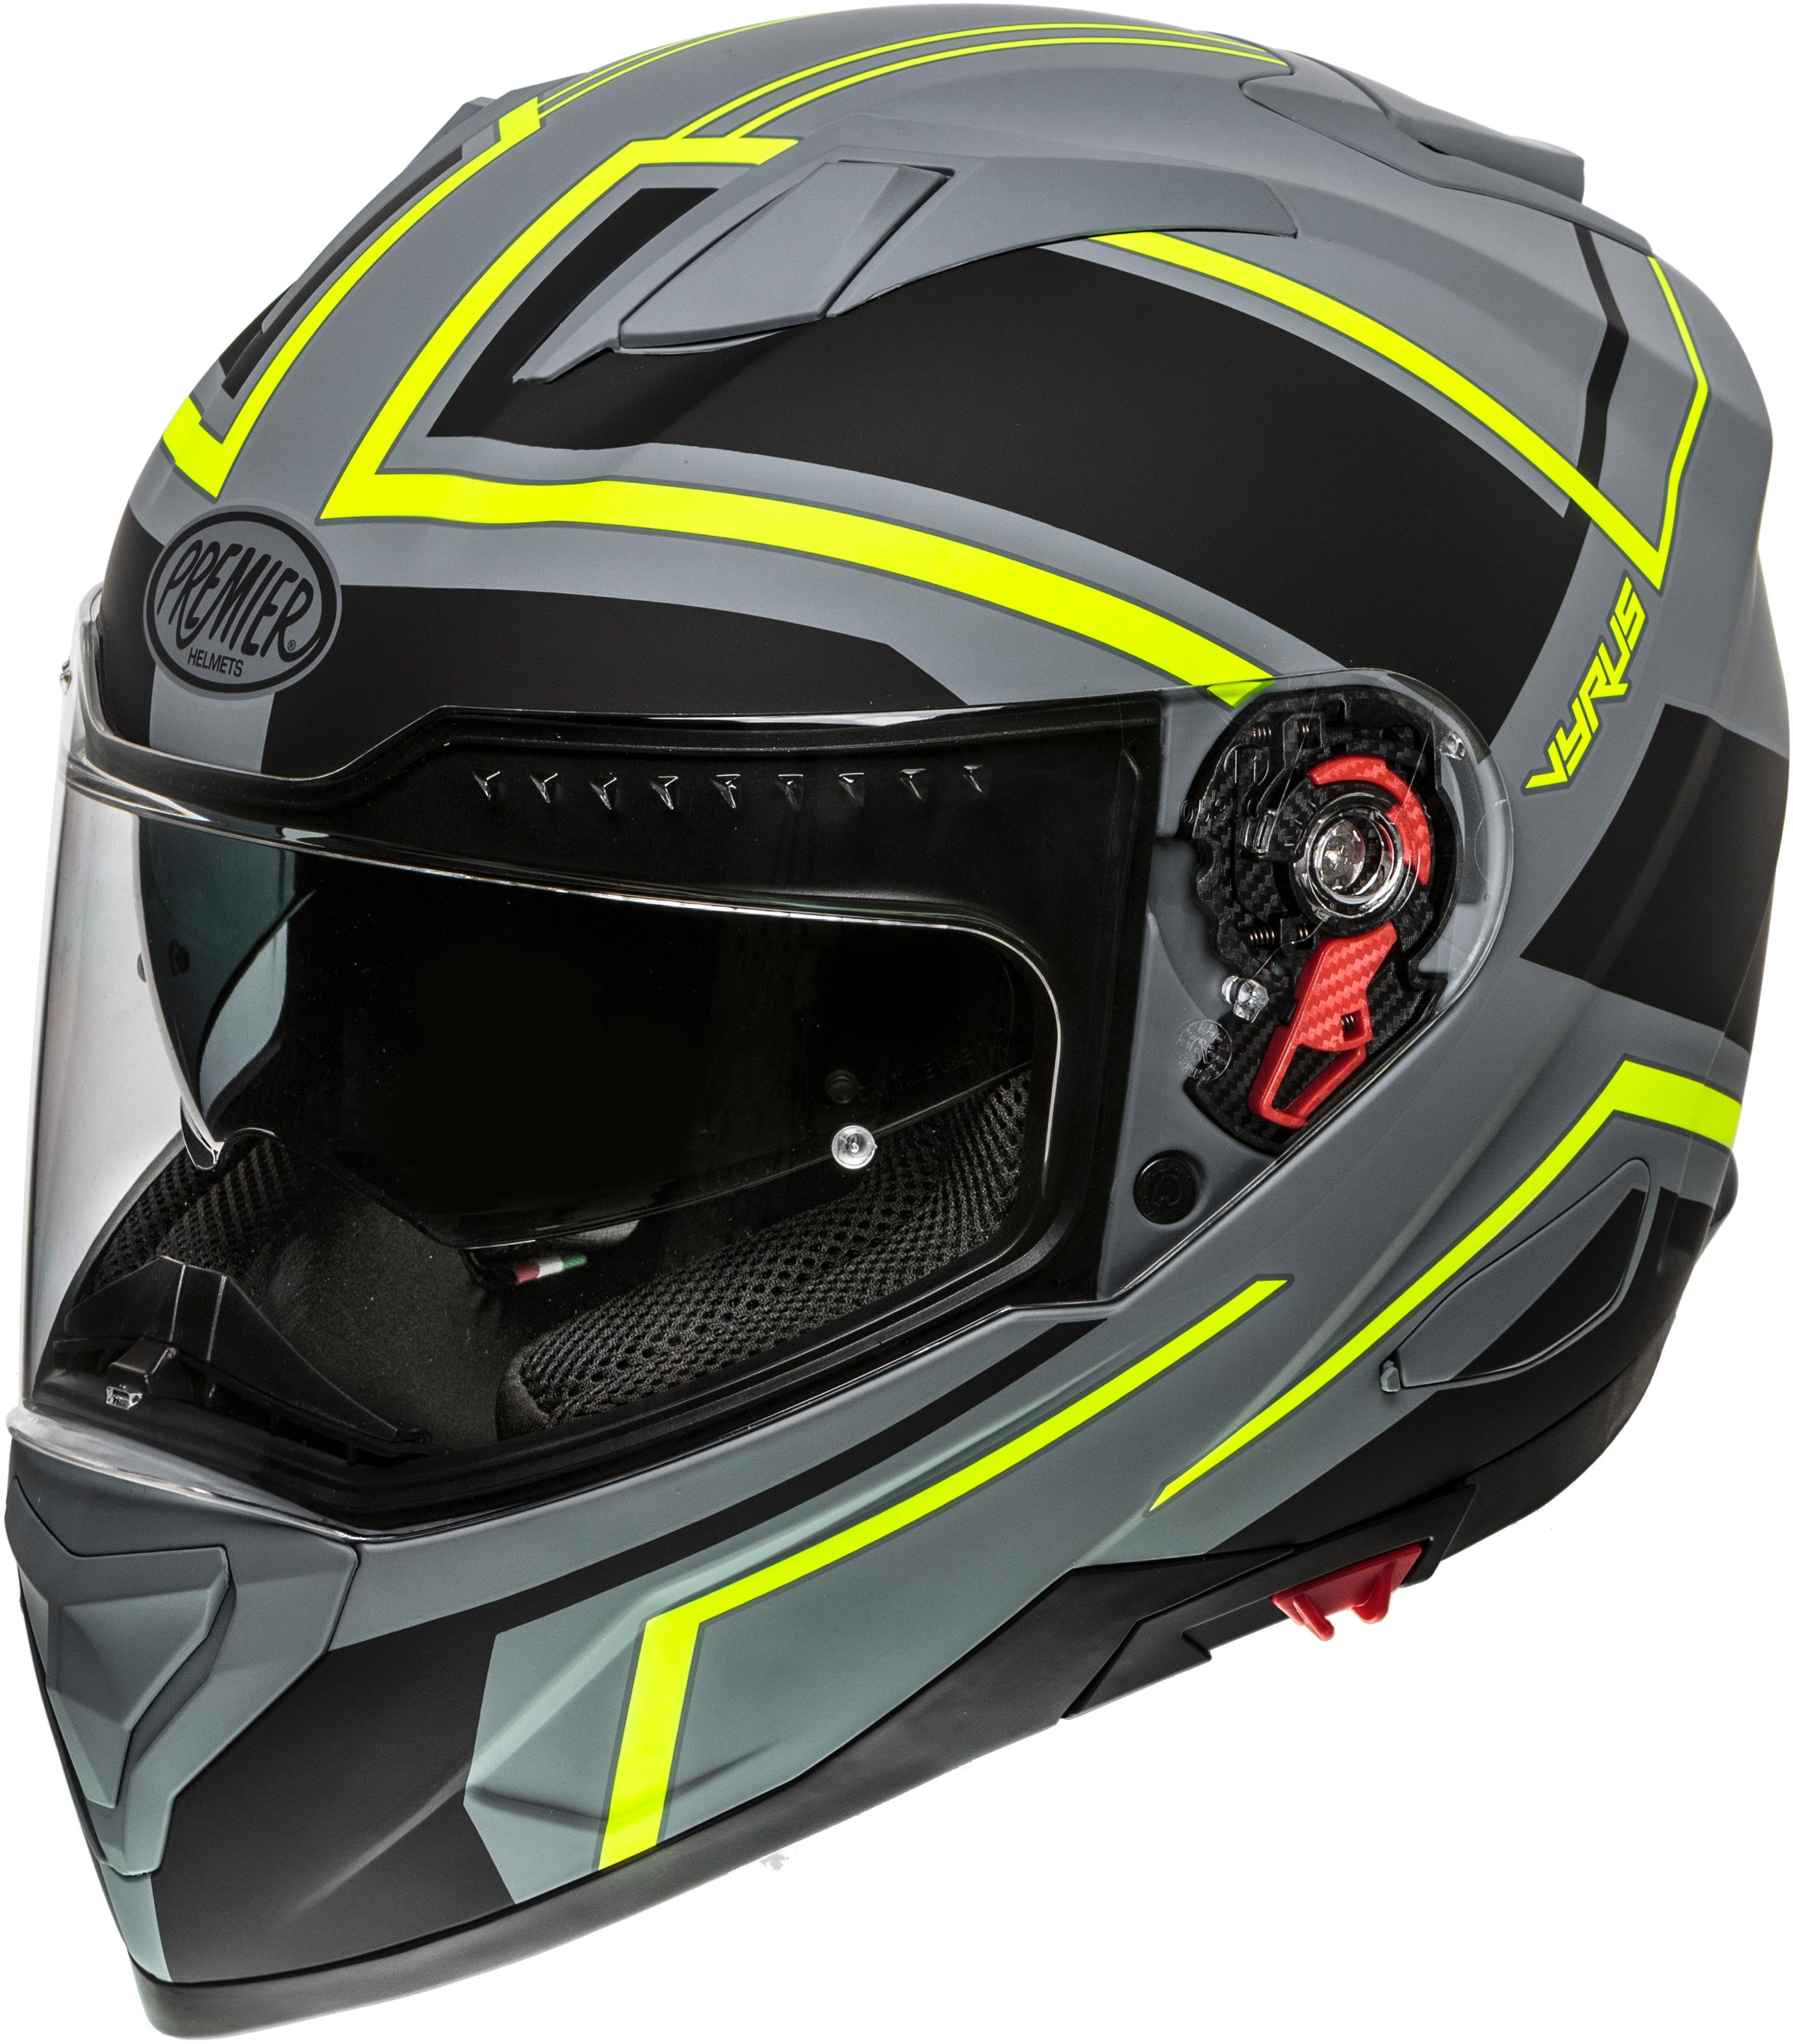 Premier Vyrus Helmet Grey/Neon Matt - Extra Large